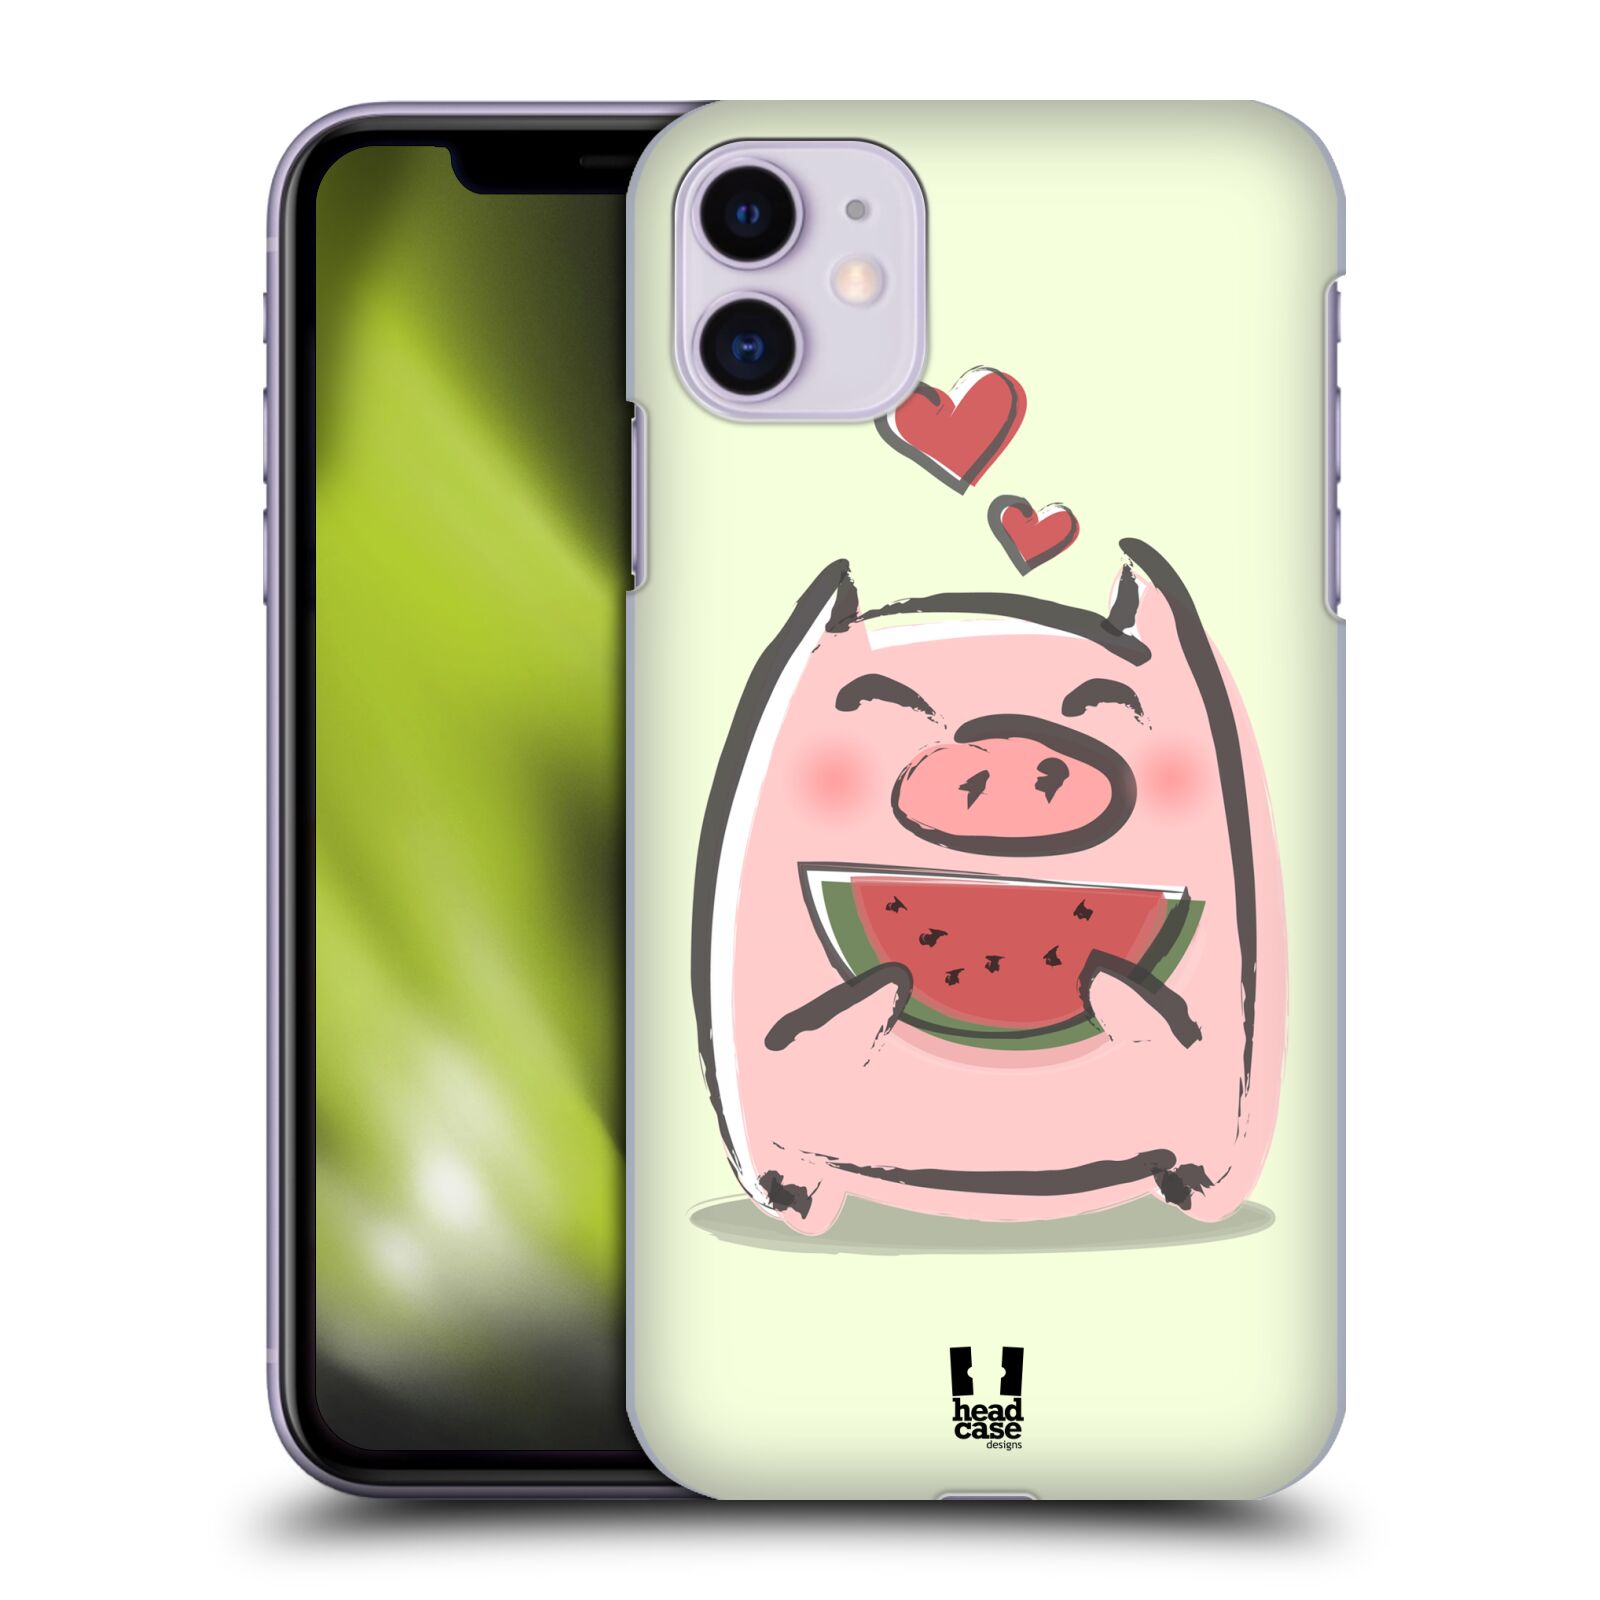 Pouzdro na mobil Apple Iphone 11 - HEAD CASE - vzor roztomilé růžové prasátko vodní meloun